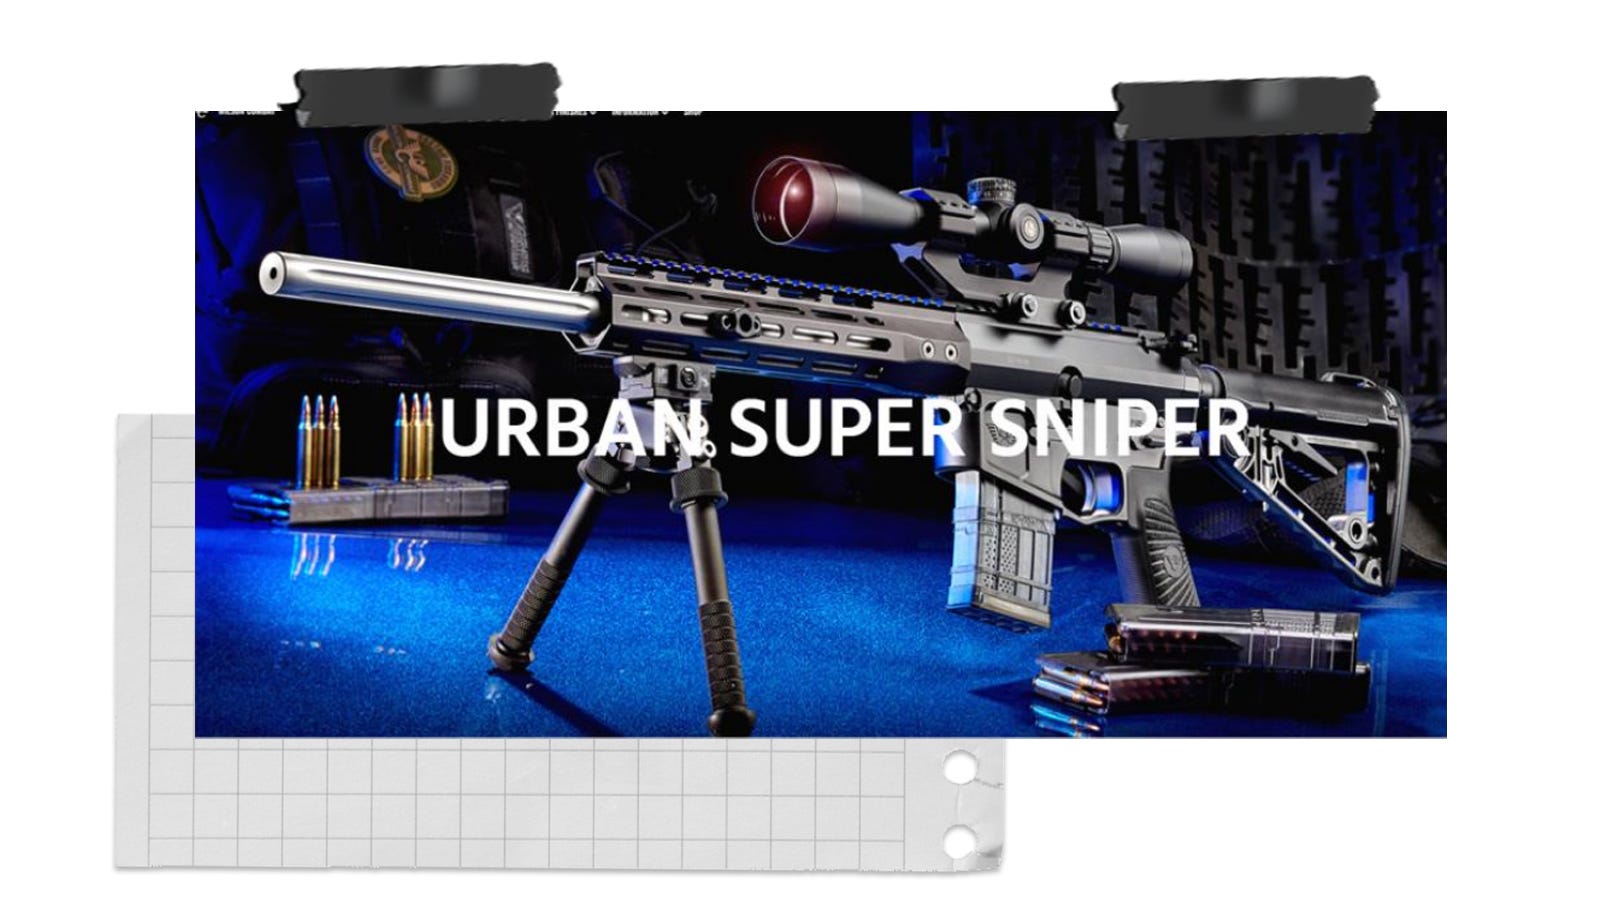 Sniper rifles, guns for kids 5 ads could change marketing forever